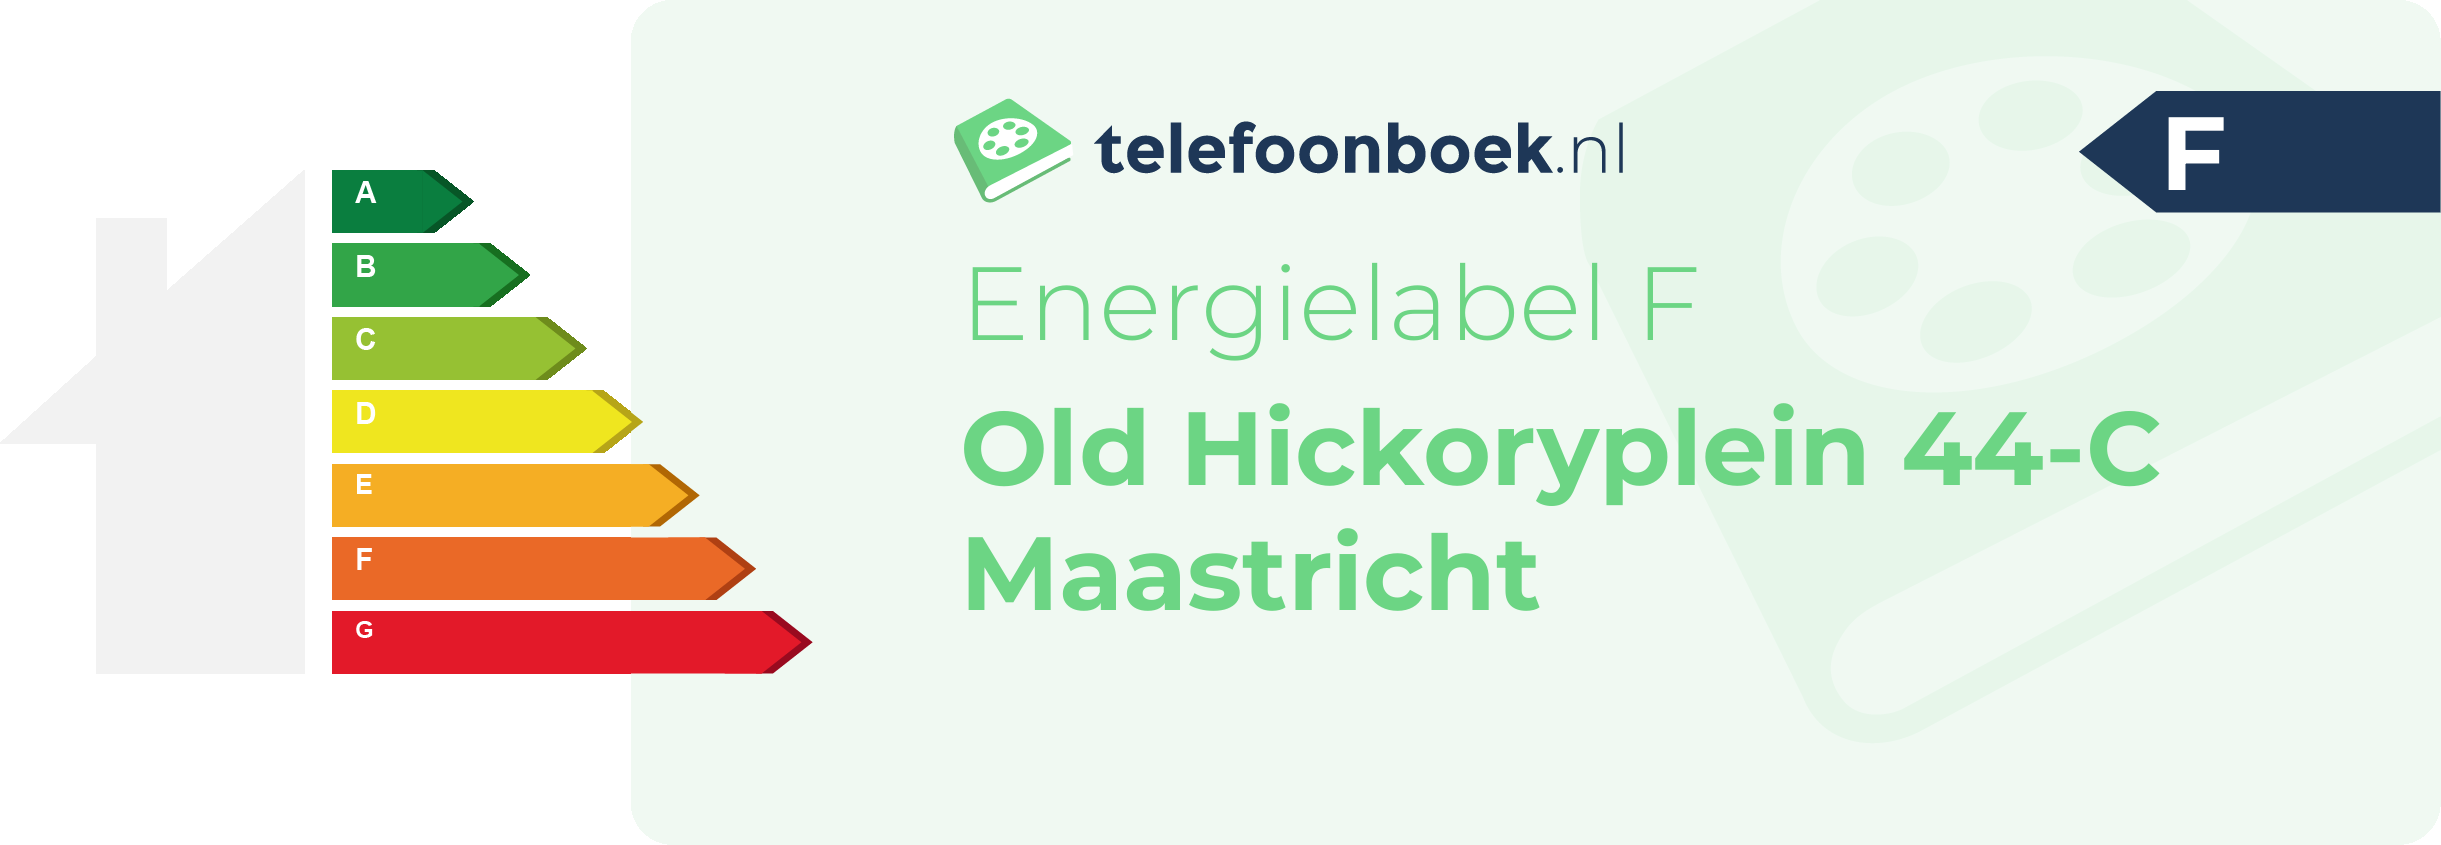 Energielabel Old Hickoryplein 44-C Maastricht